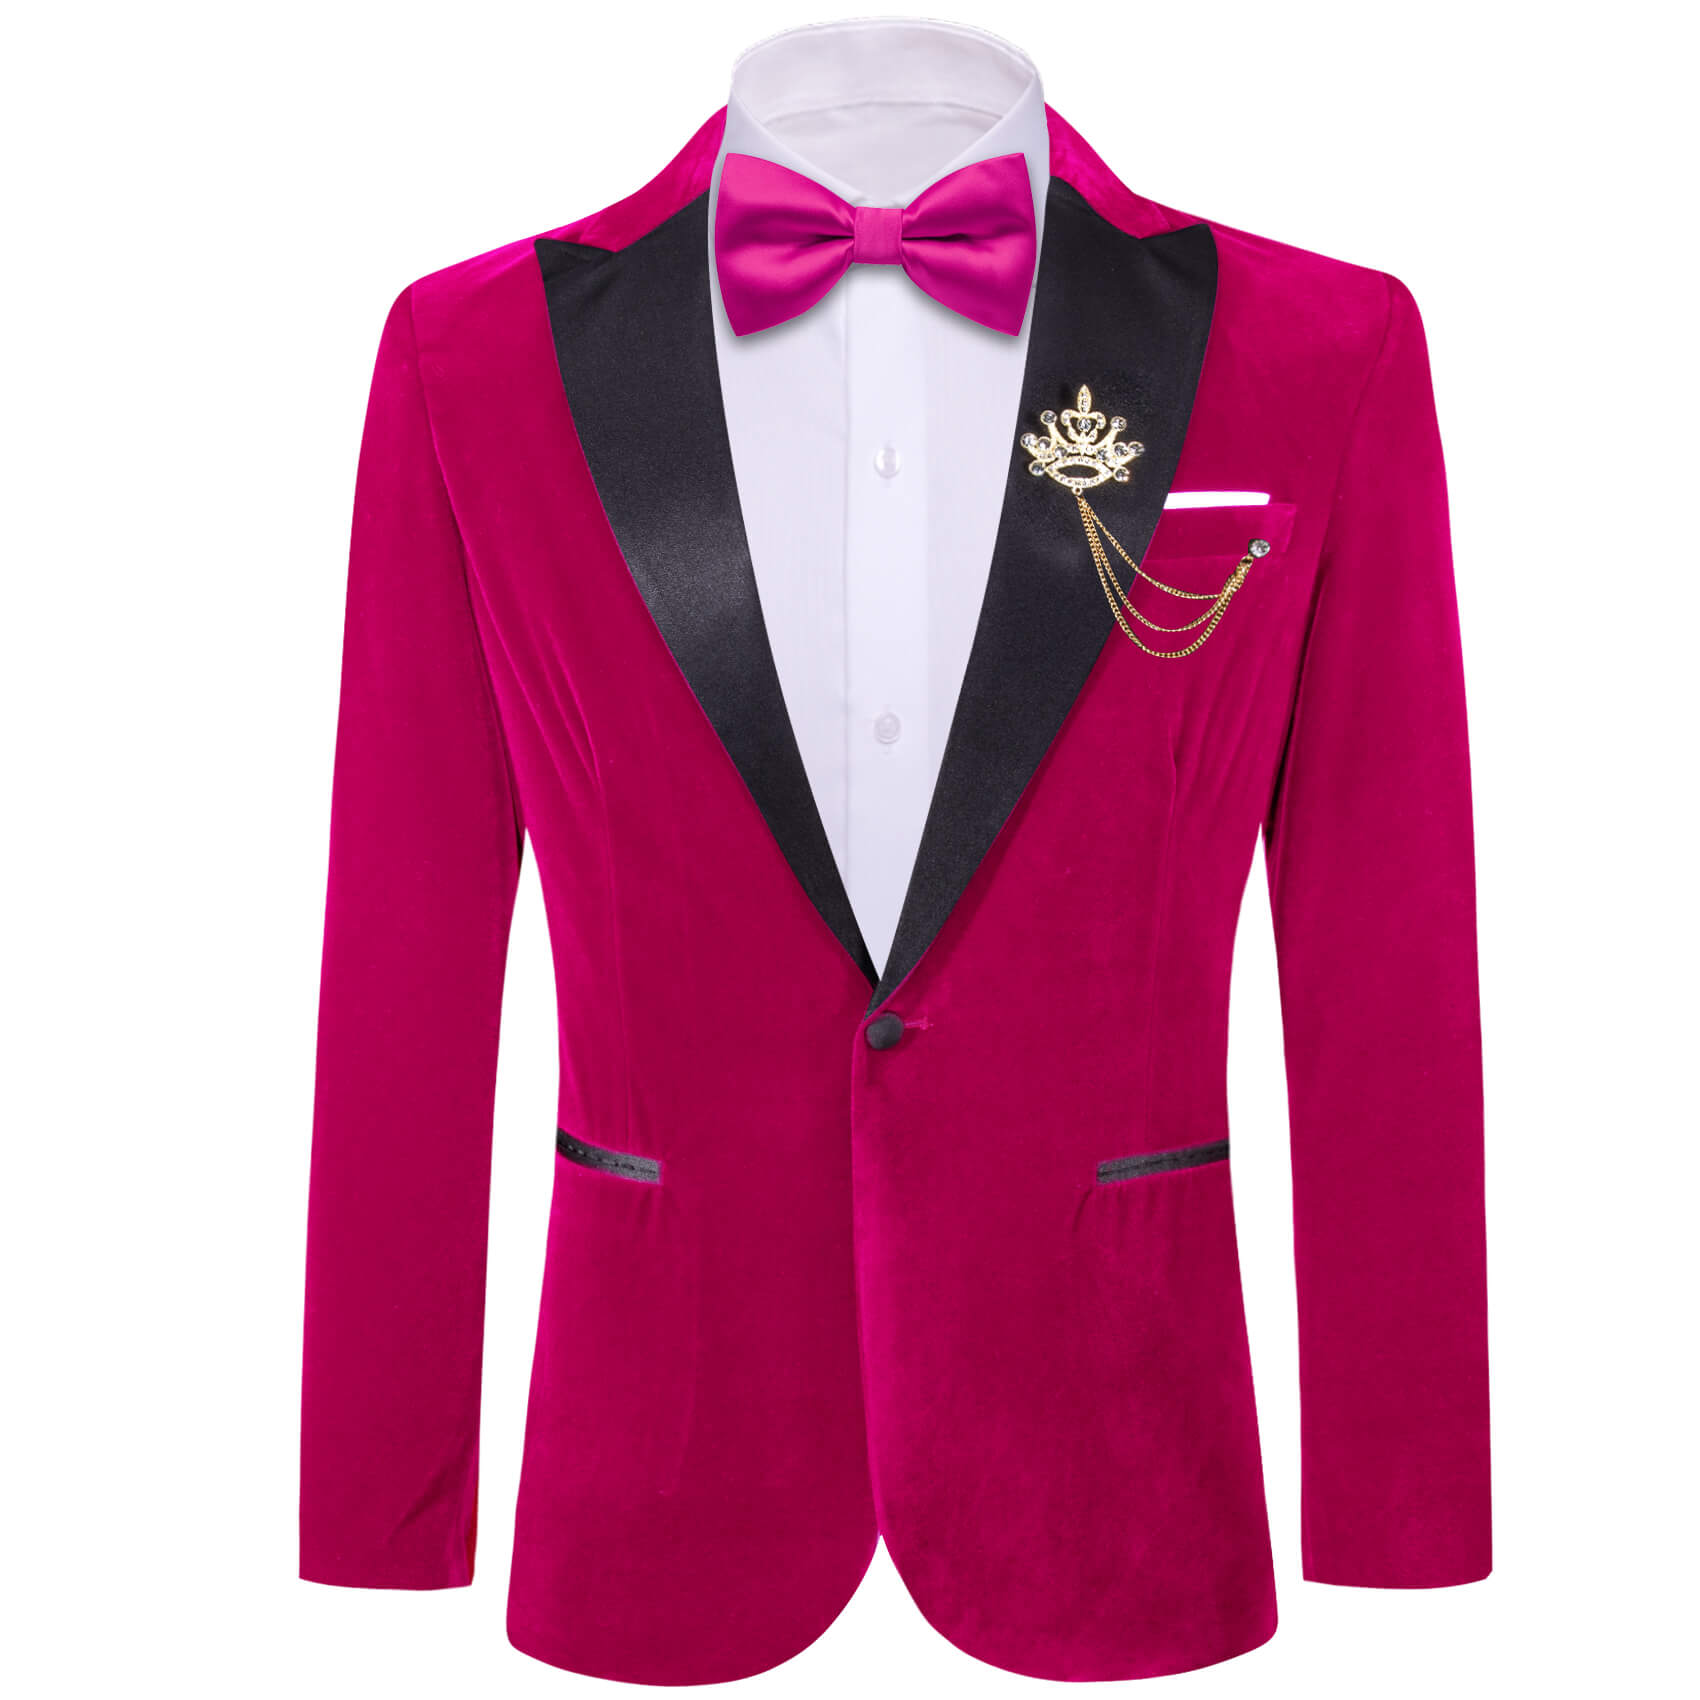  Peak Collar Suit Ruby Pink Solid Men's Silk Suit